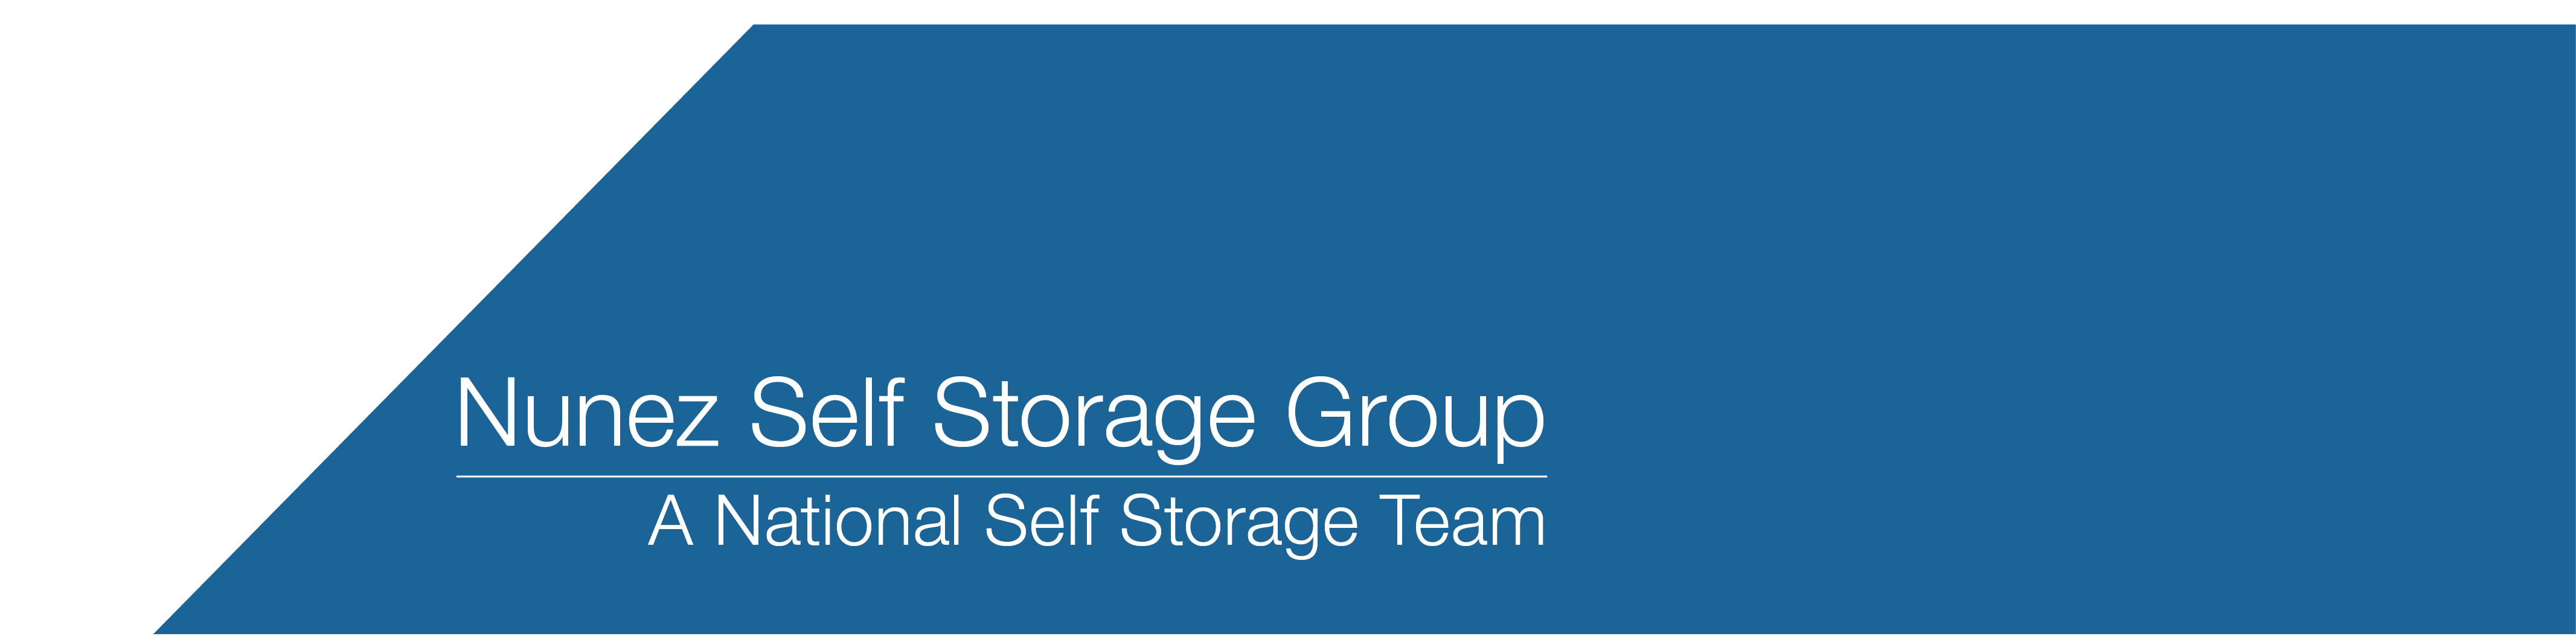 Nunez Self Storage Group